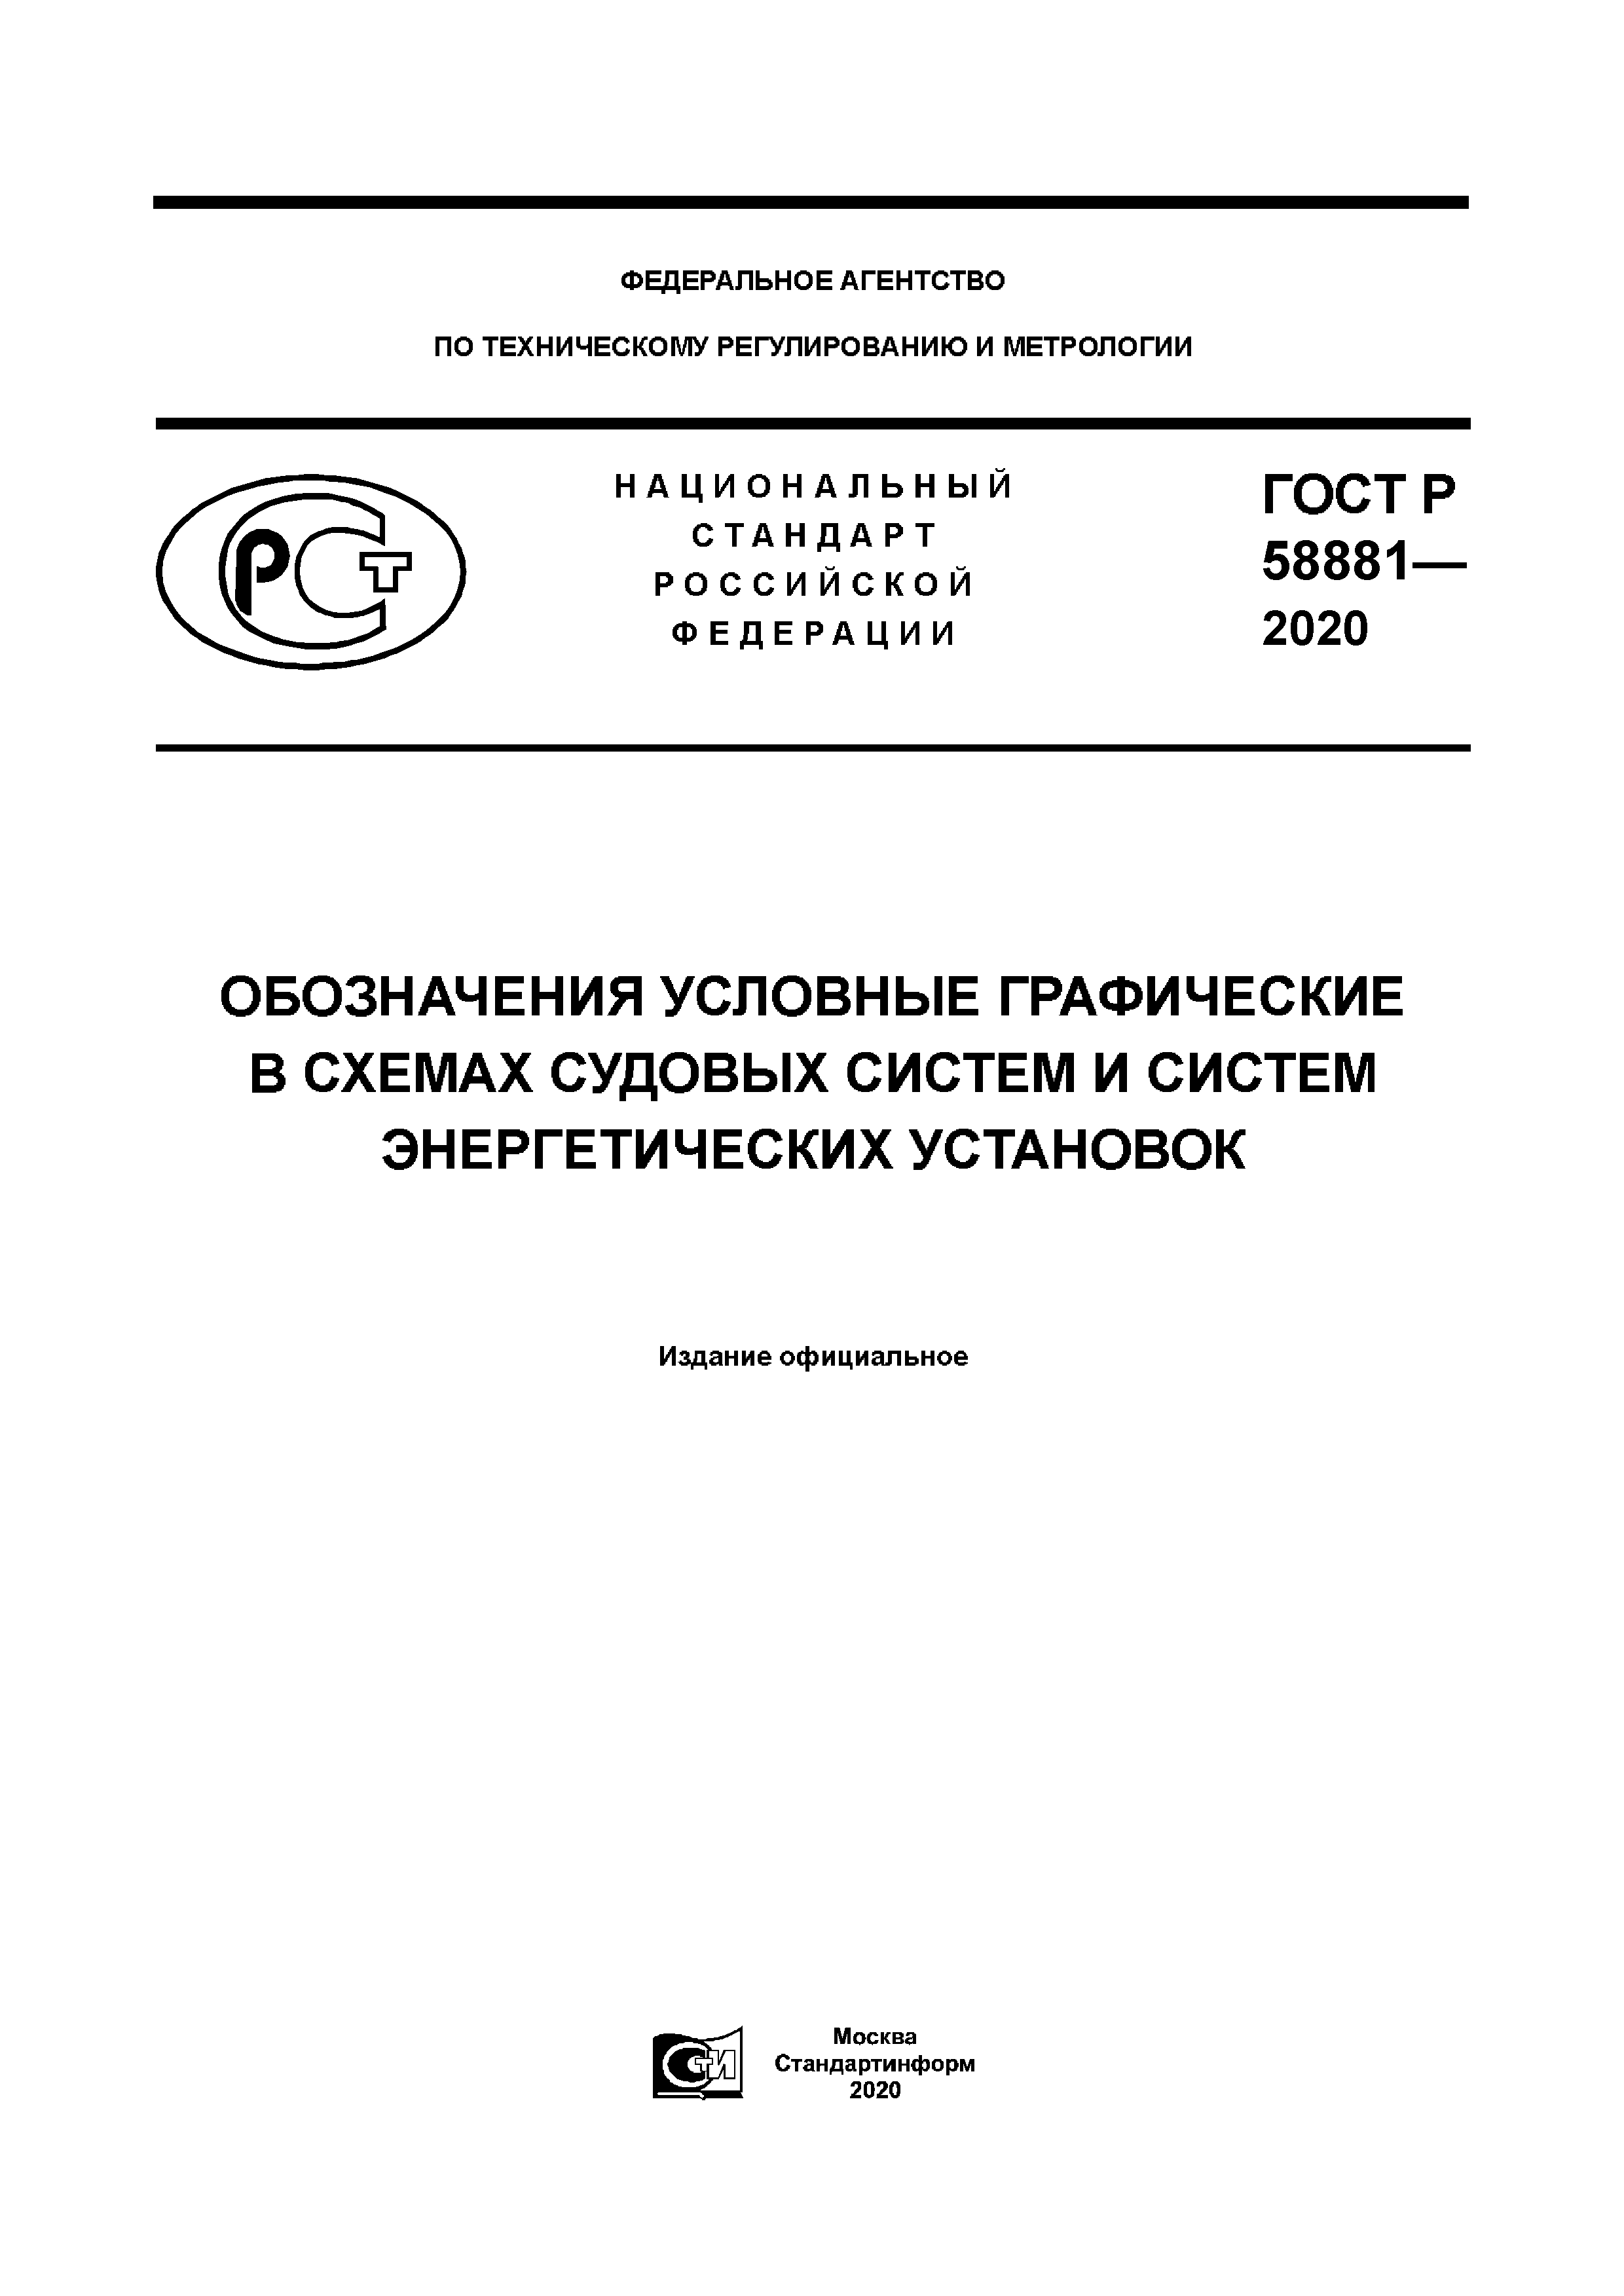 ГОСТ Р 58881-2020